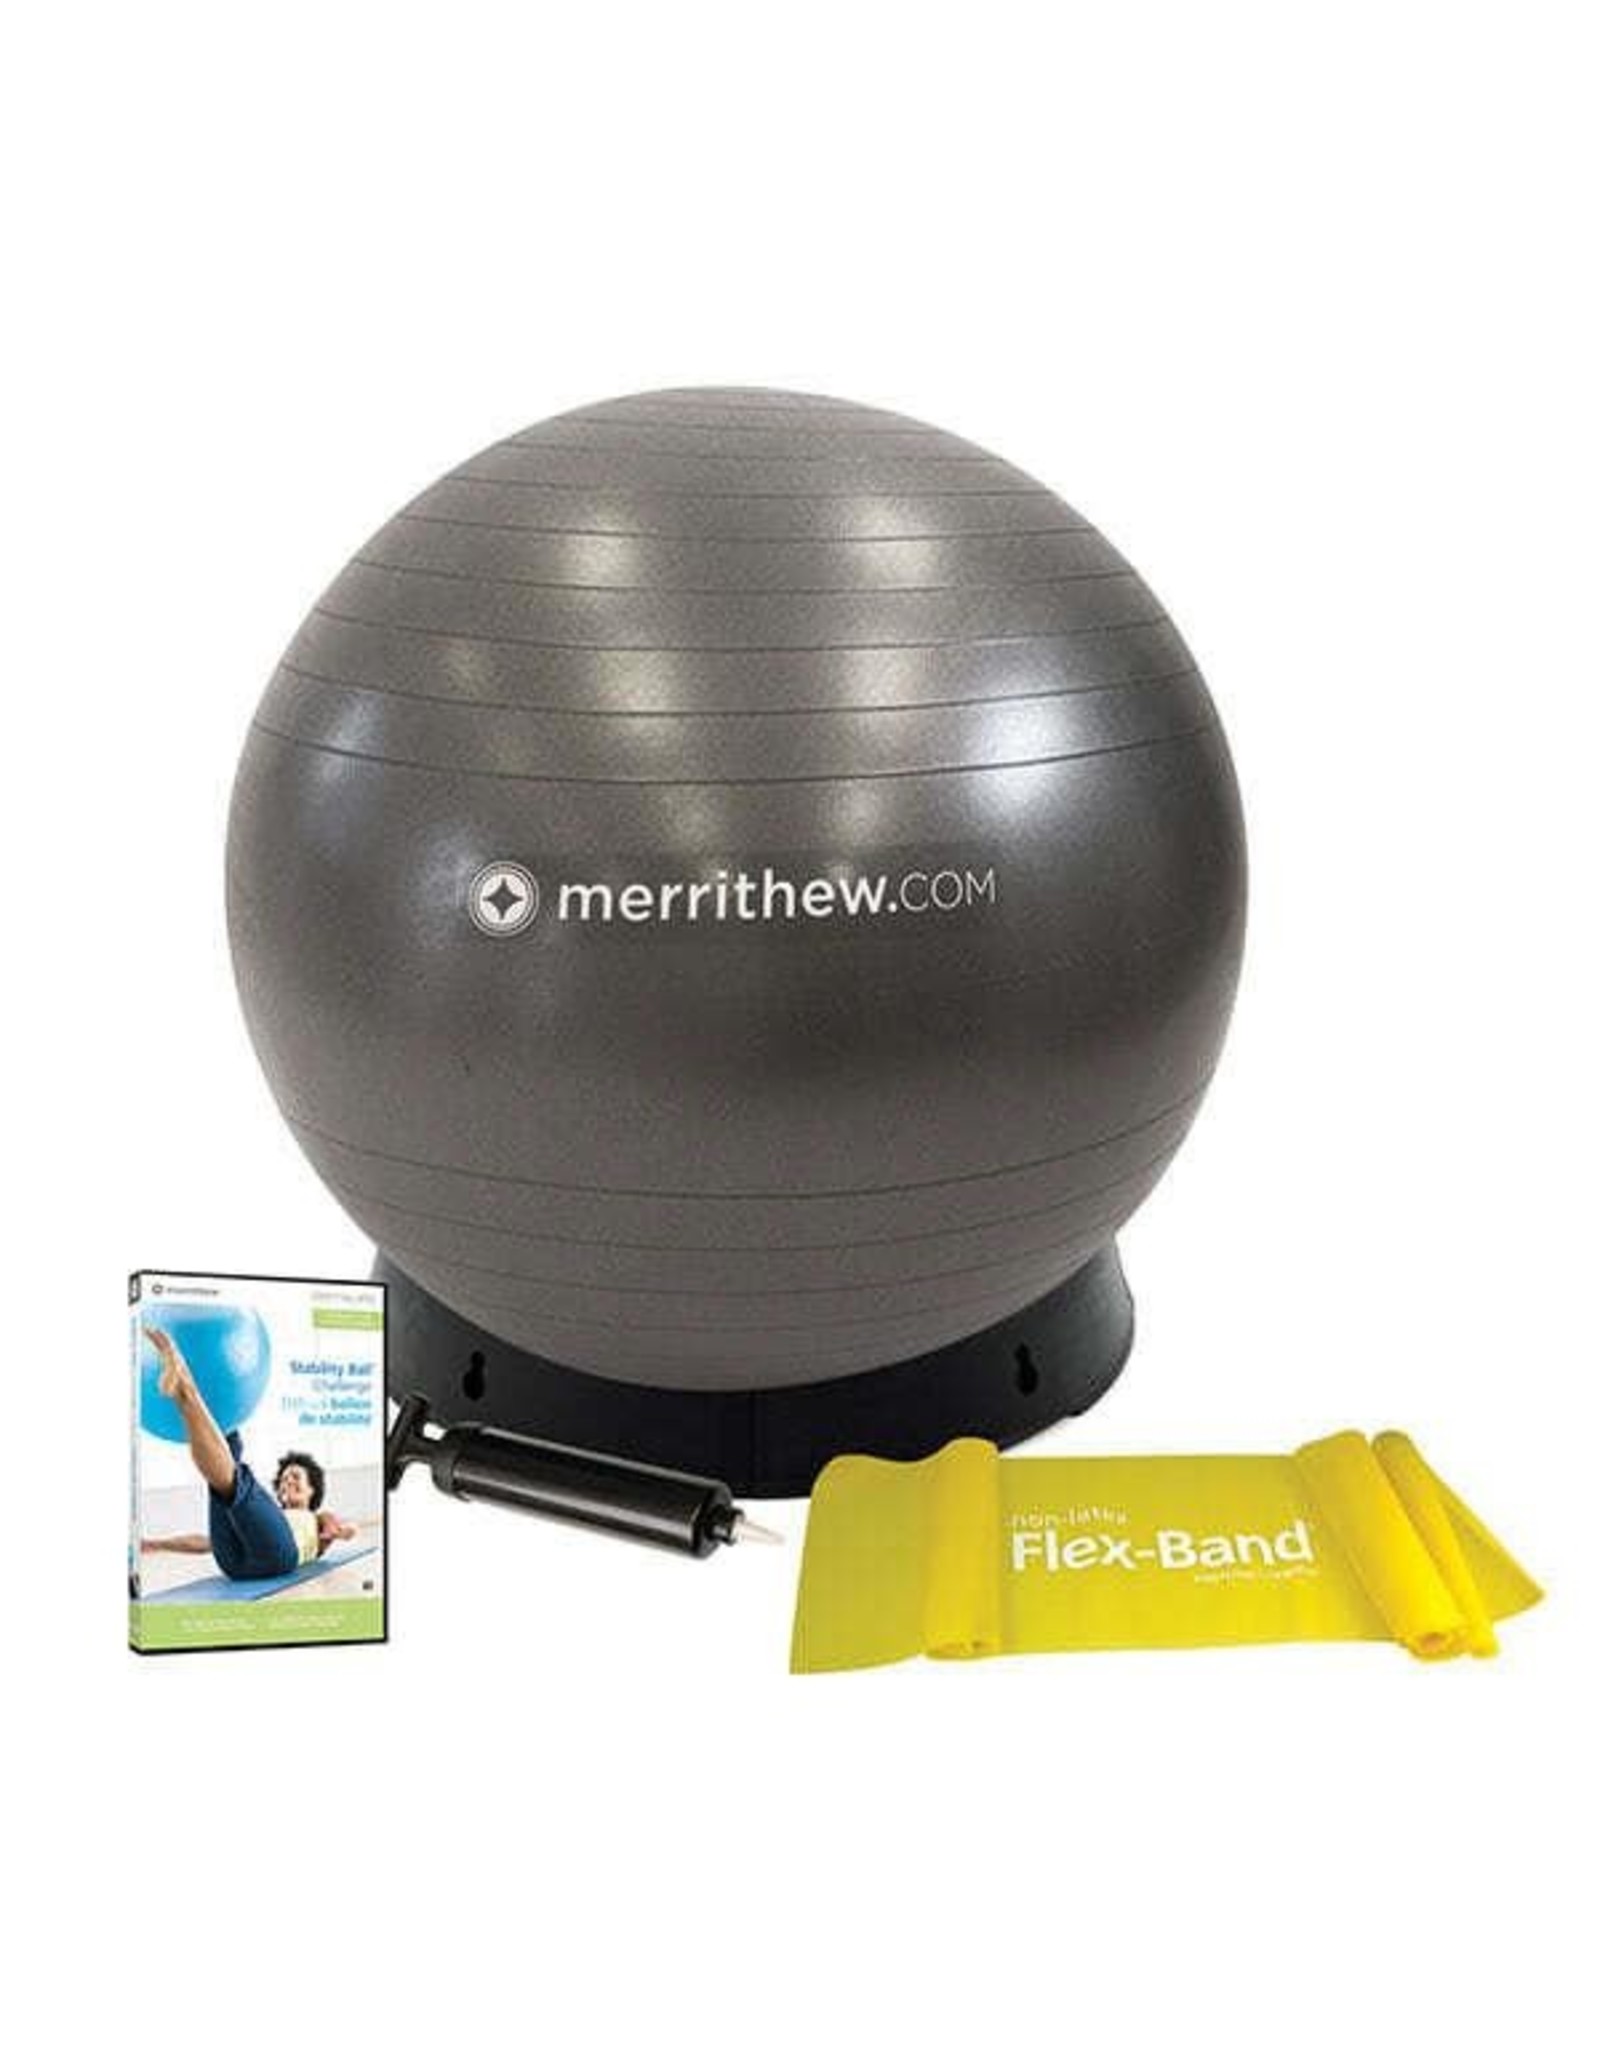 MERRITHEW Stability Ball with Base Bundle